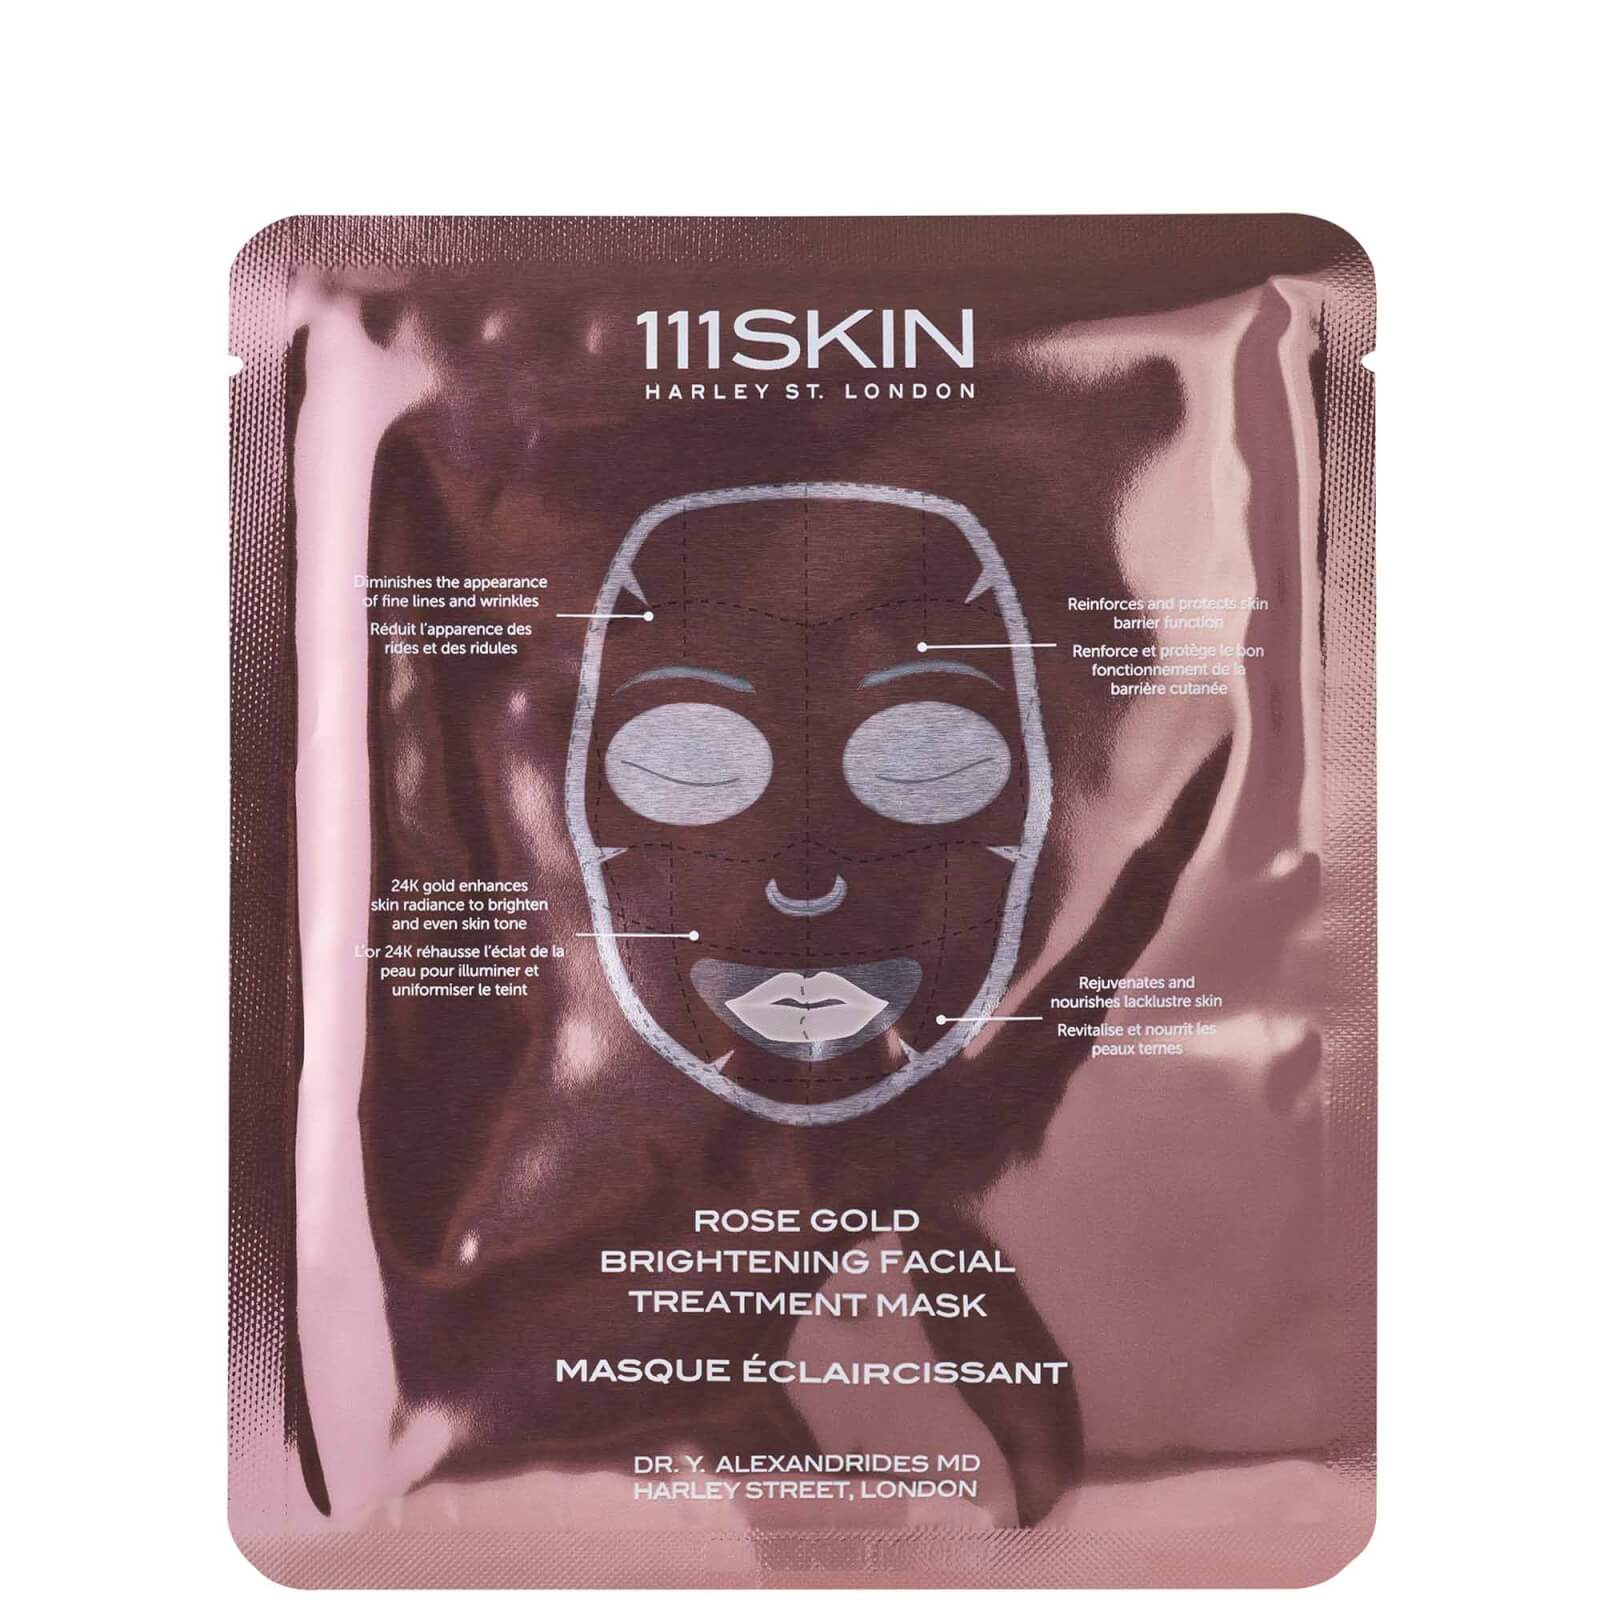 Image of 111SKIN Rose Gold Brightening Facial Treatment Mask Box